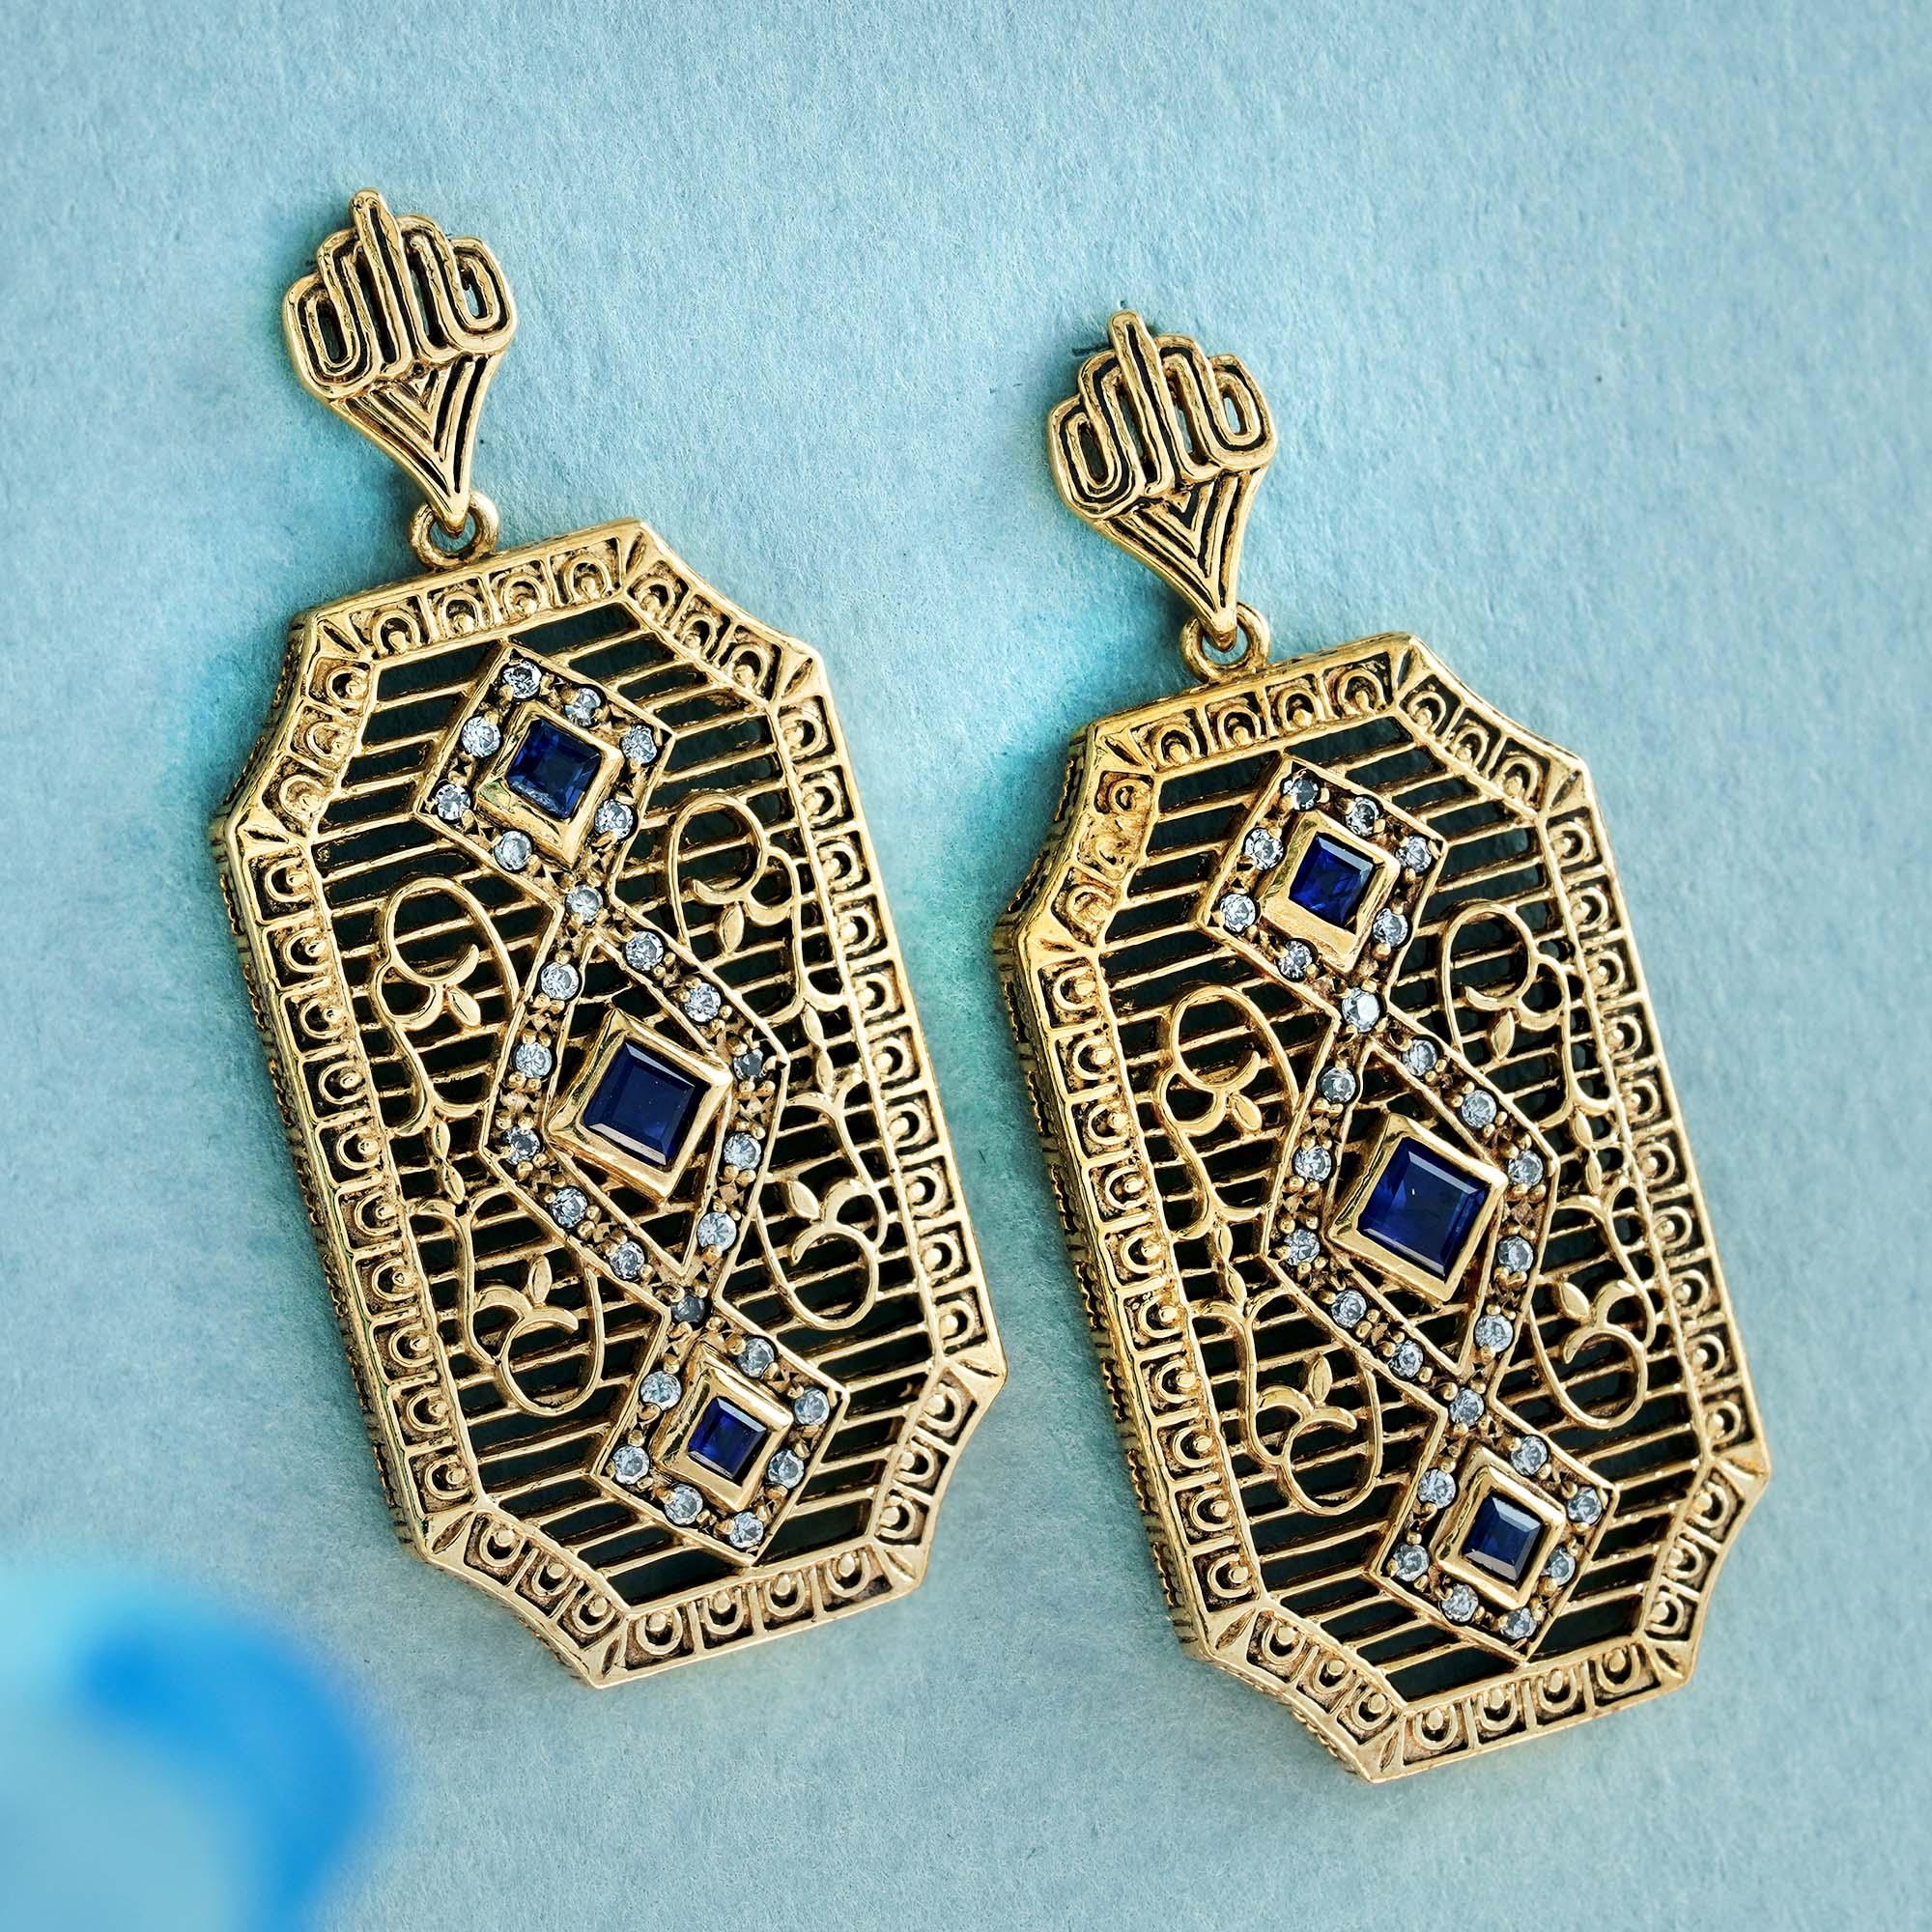 Edwardian Natural Blue Sapphire Diamond Vintage Deco Style Filigree Earrings in 9K Gold